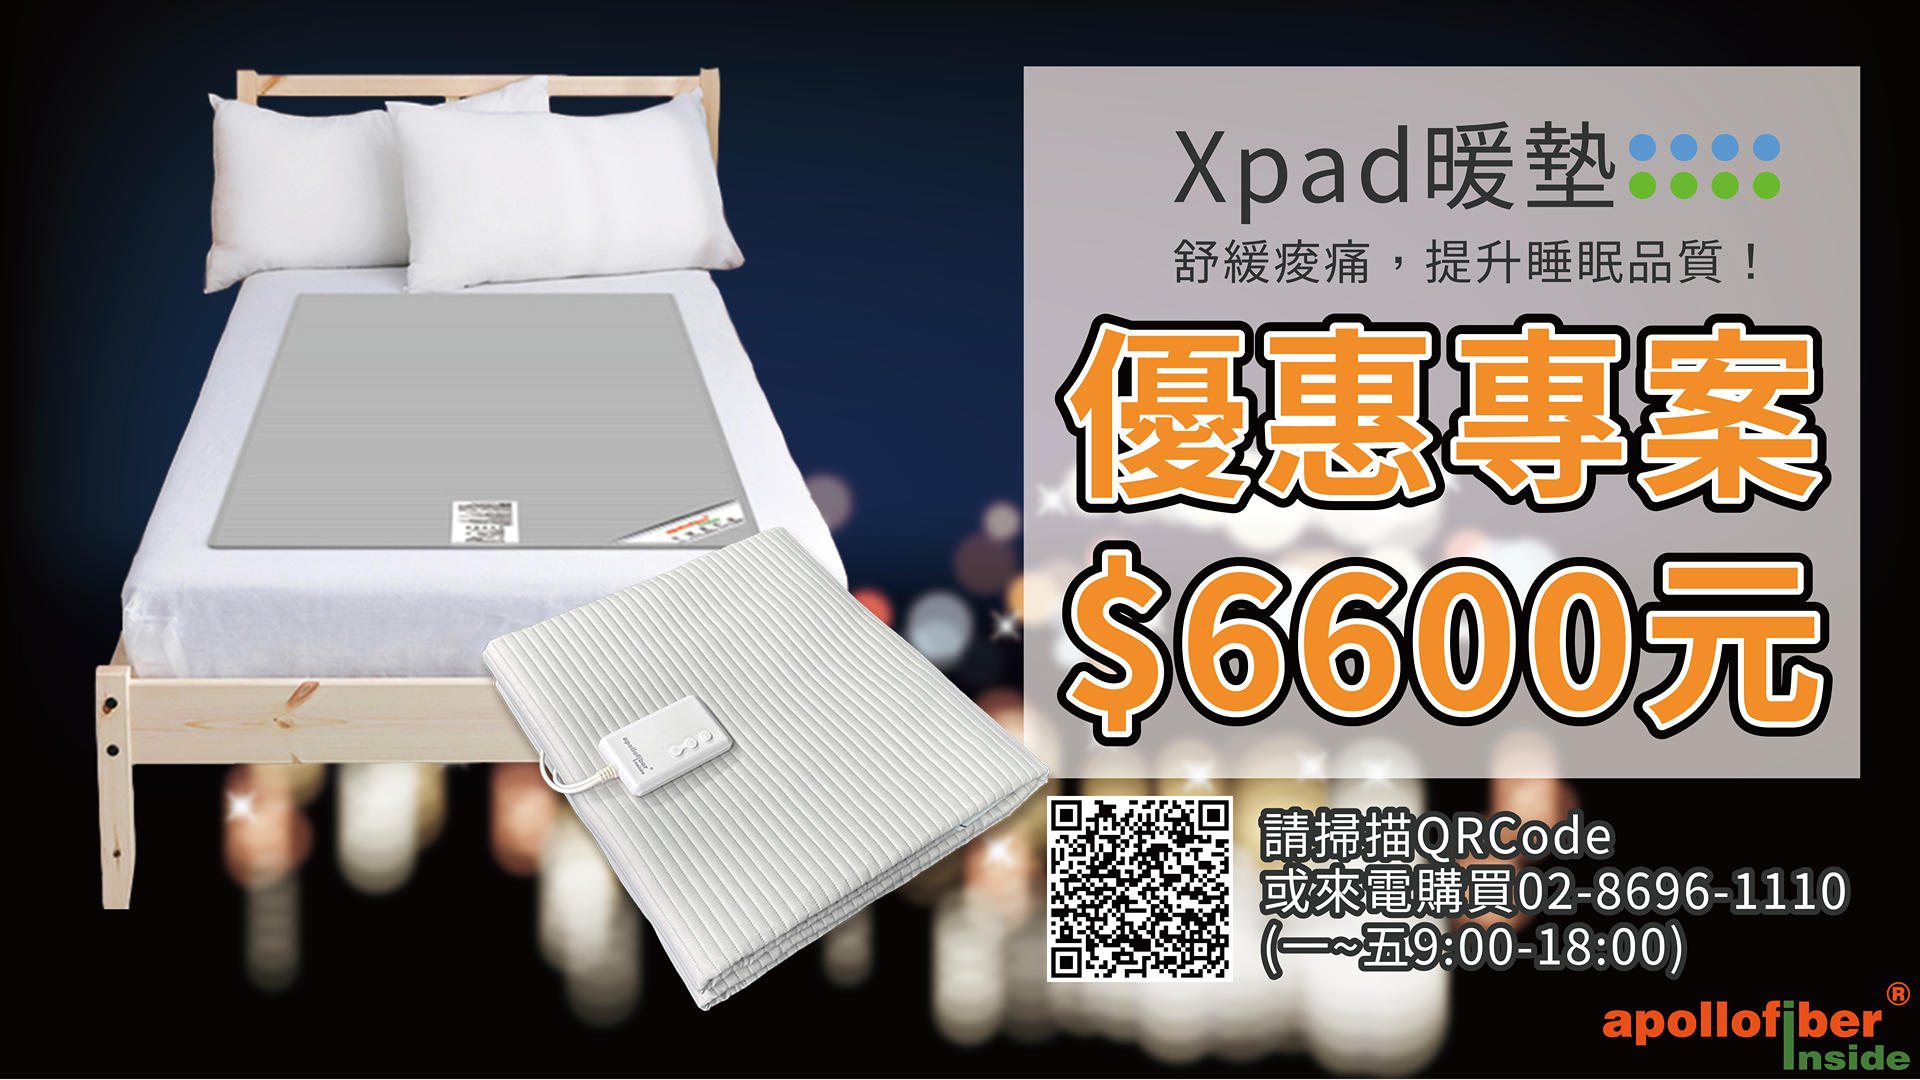 apollofiber inside® Xpad遠紅外養生暖墊 | 贈防塵收納袋